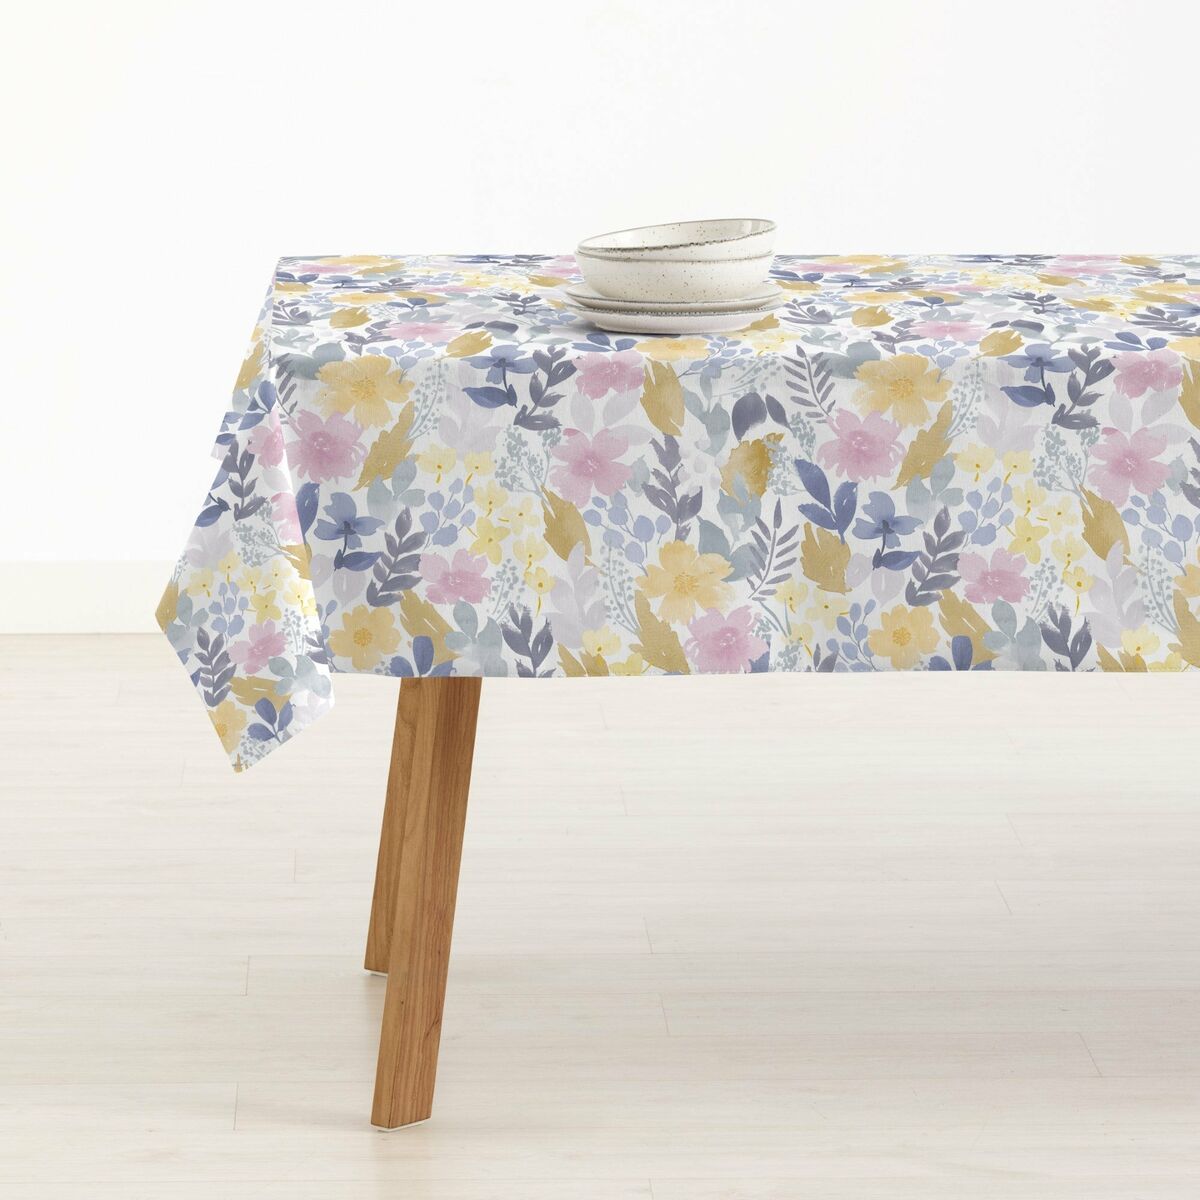 Stain-proof tablecloth Belum Gisborne 300 x 140 cm